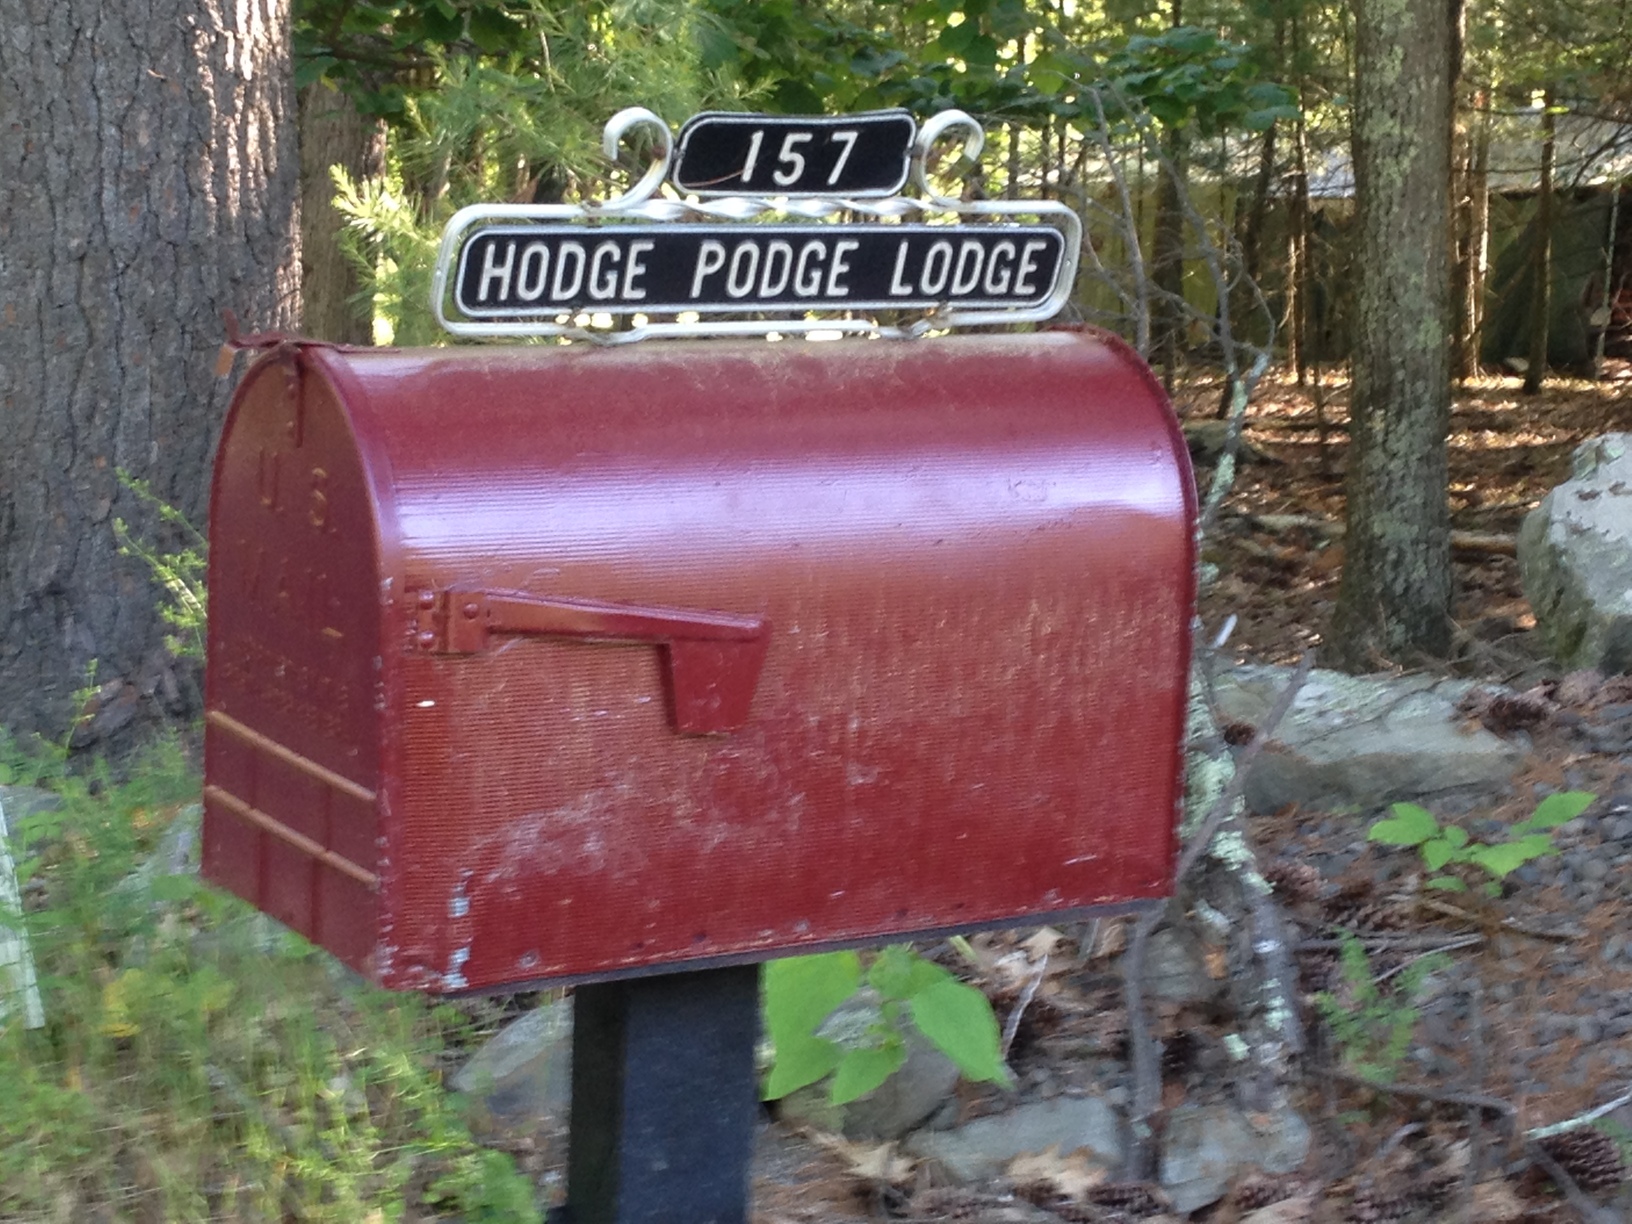 Hodge Podge Lodge mailbox